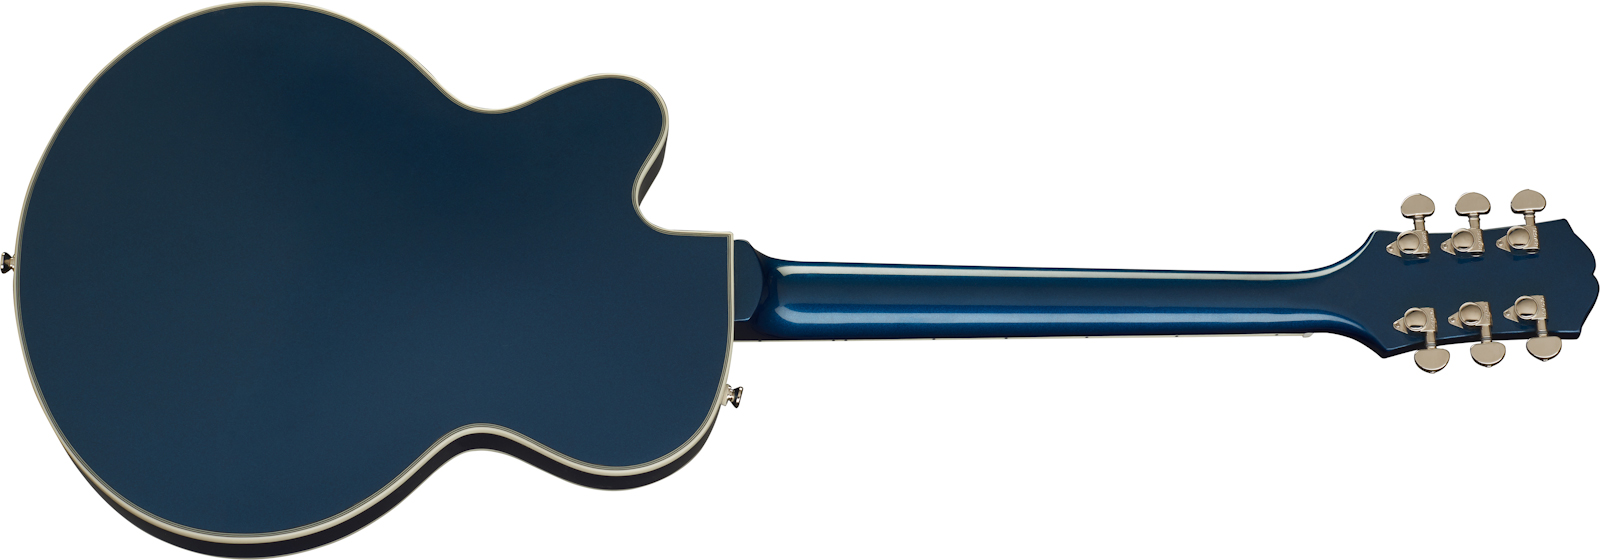 Epiphone Uptown Kat Es Original 2h Ht Eb - Sapphire Blue Metallic - Semi hollow elektriche gitaar - Variation 1